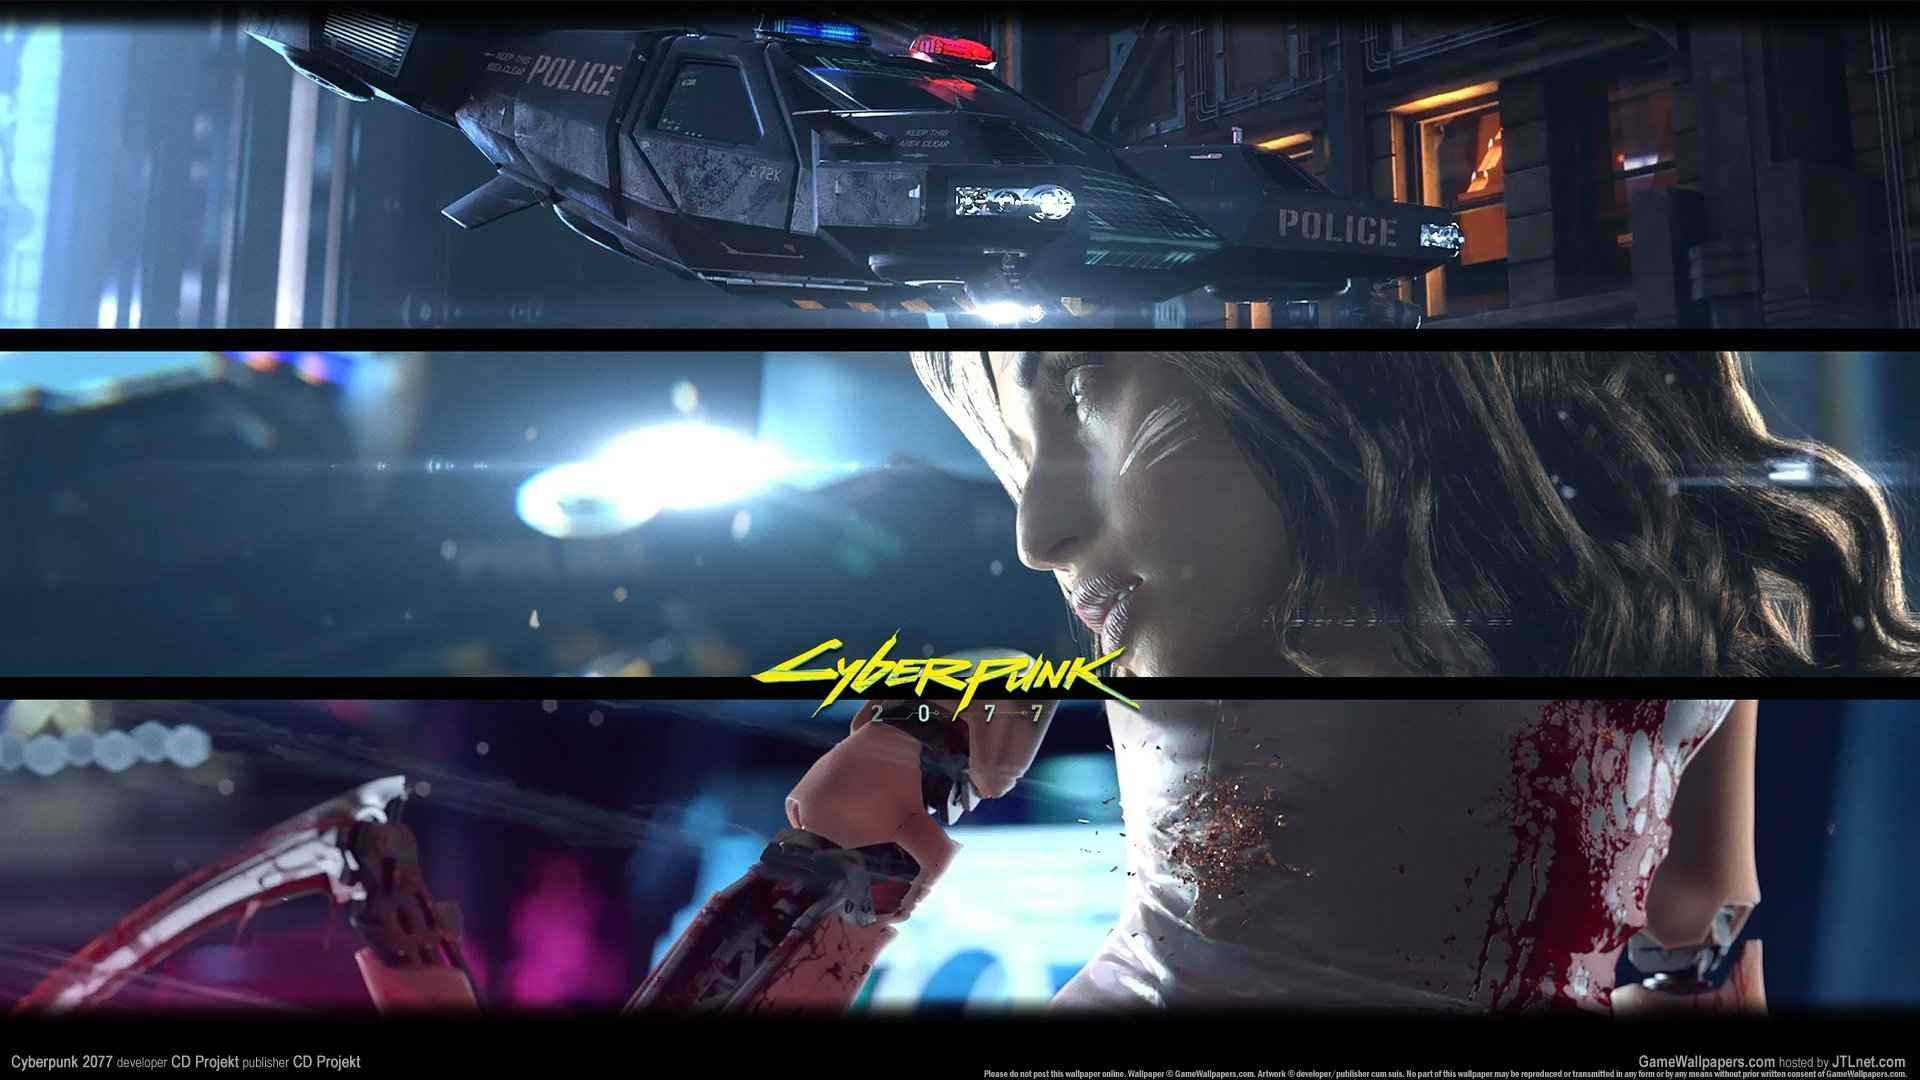  Rumor Cyberpunk  2077 may be playable at E3 PlayStation 